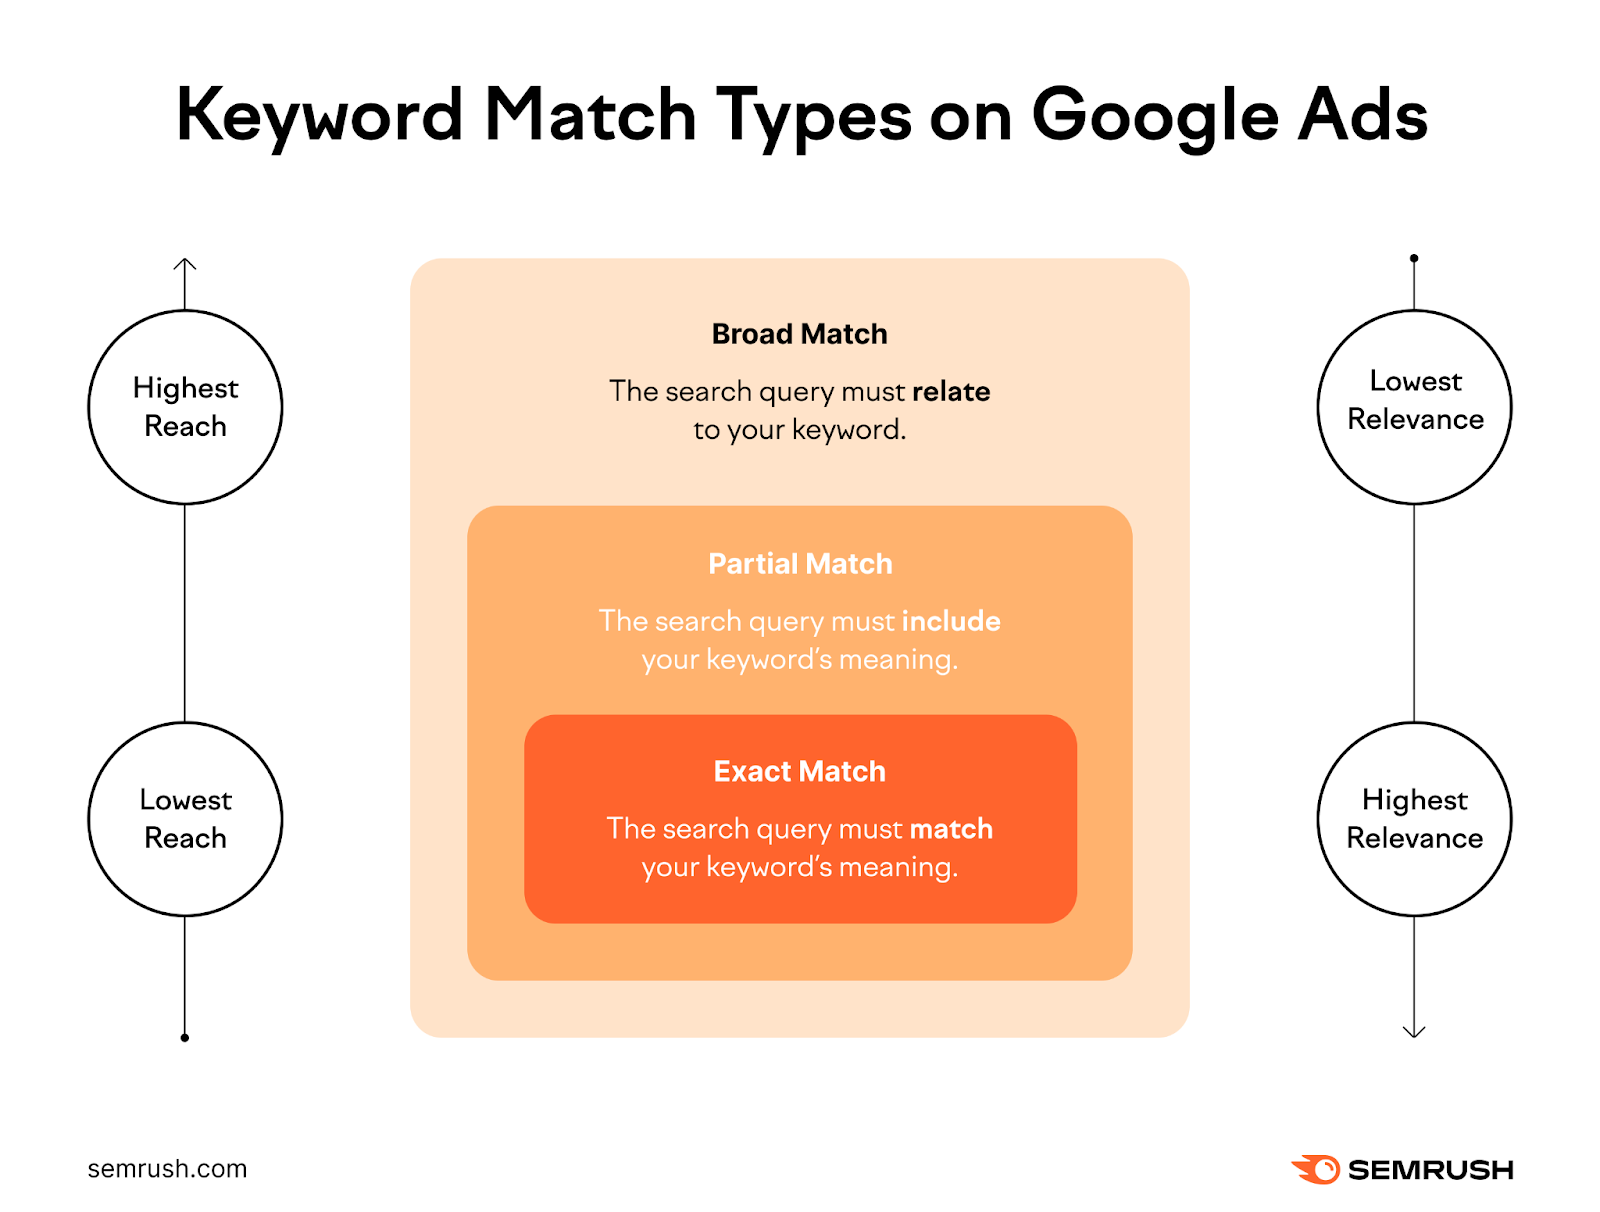 Keyword match types on Google Ads